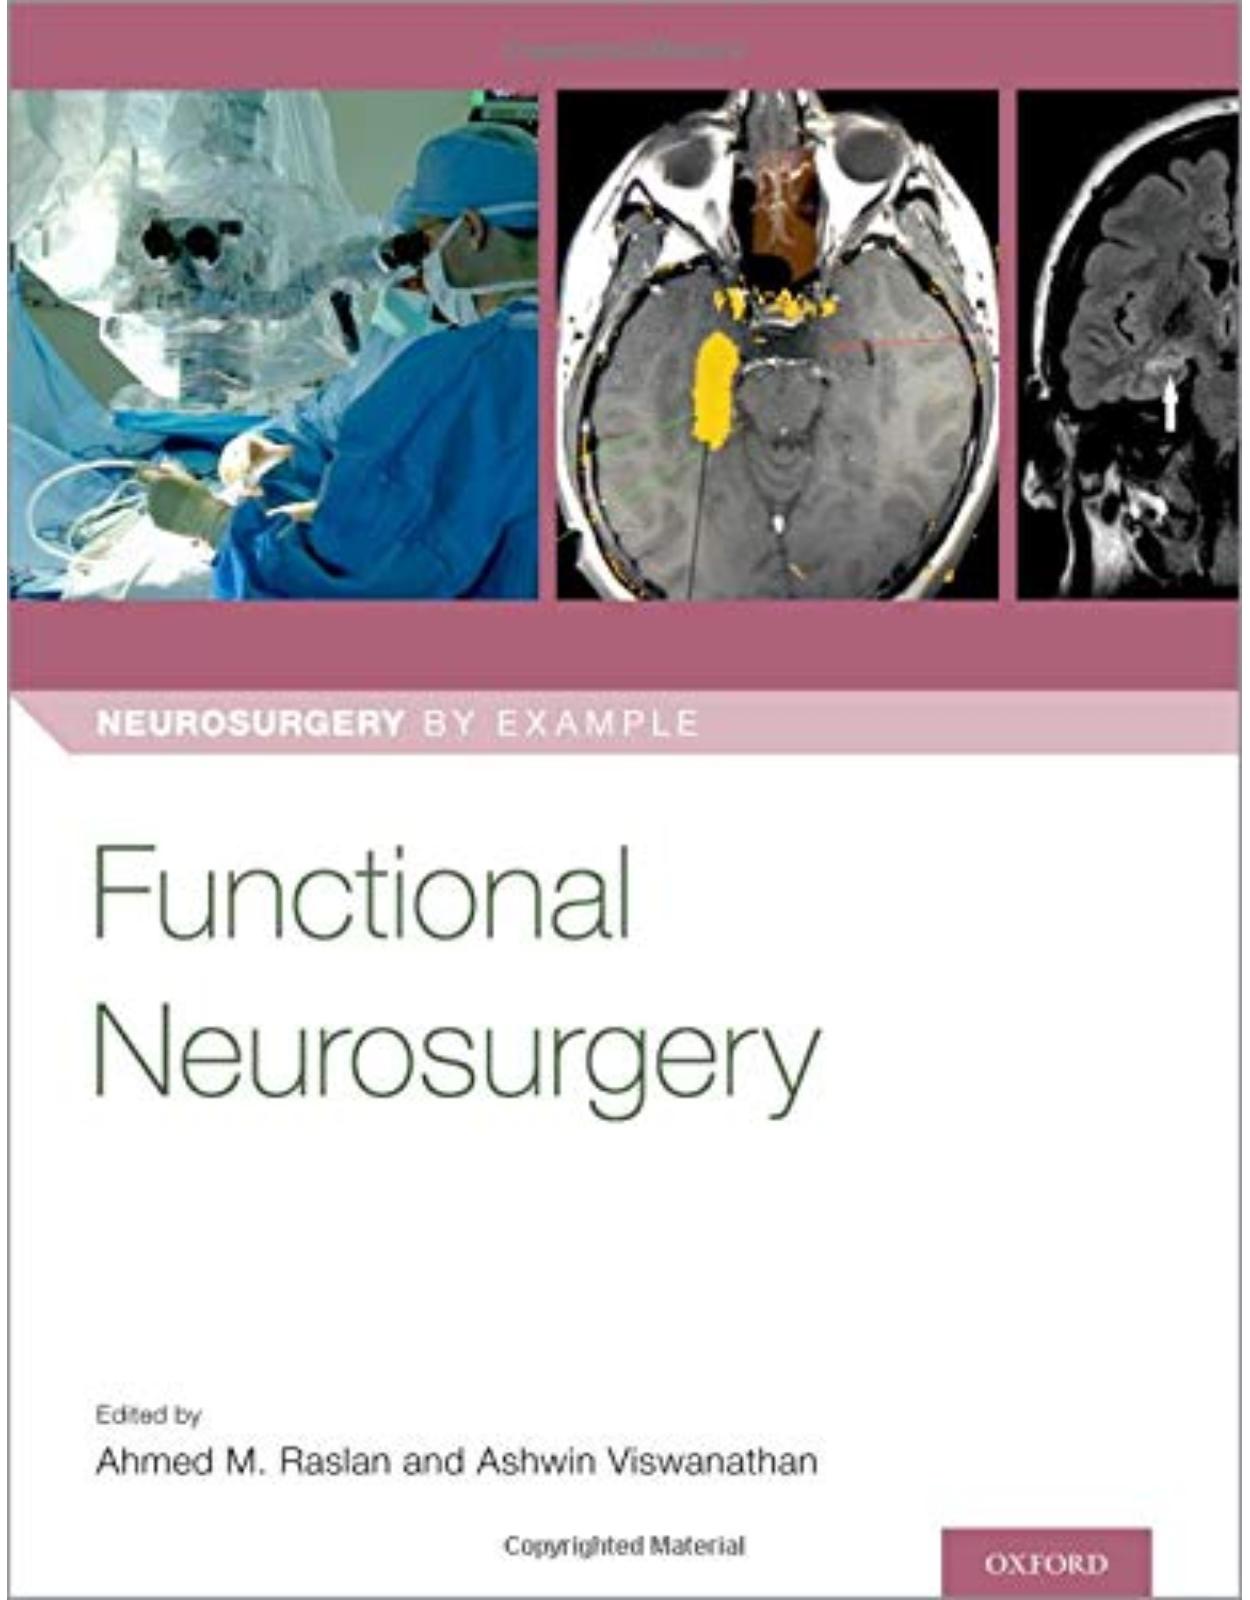 Functional Neurosurgery (Neurosurgery by Example) 